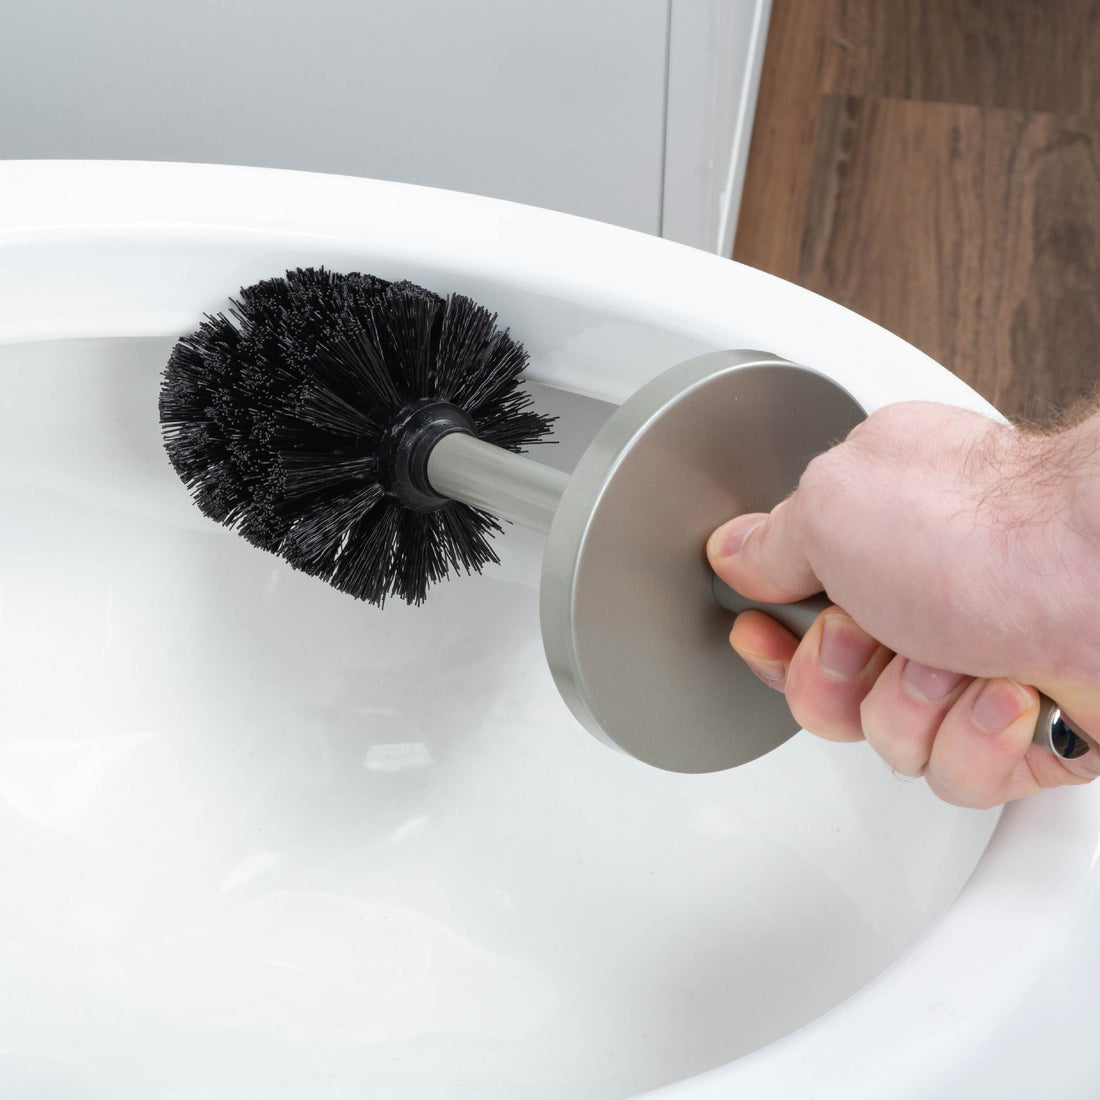 Toilet Brush and Holder (Brushed Nickel Finish) - Utility sinks vanites Tehila